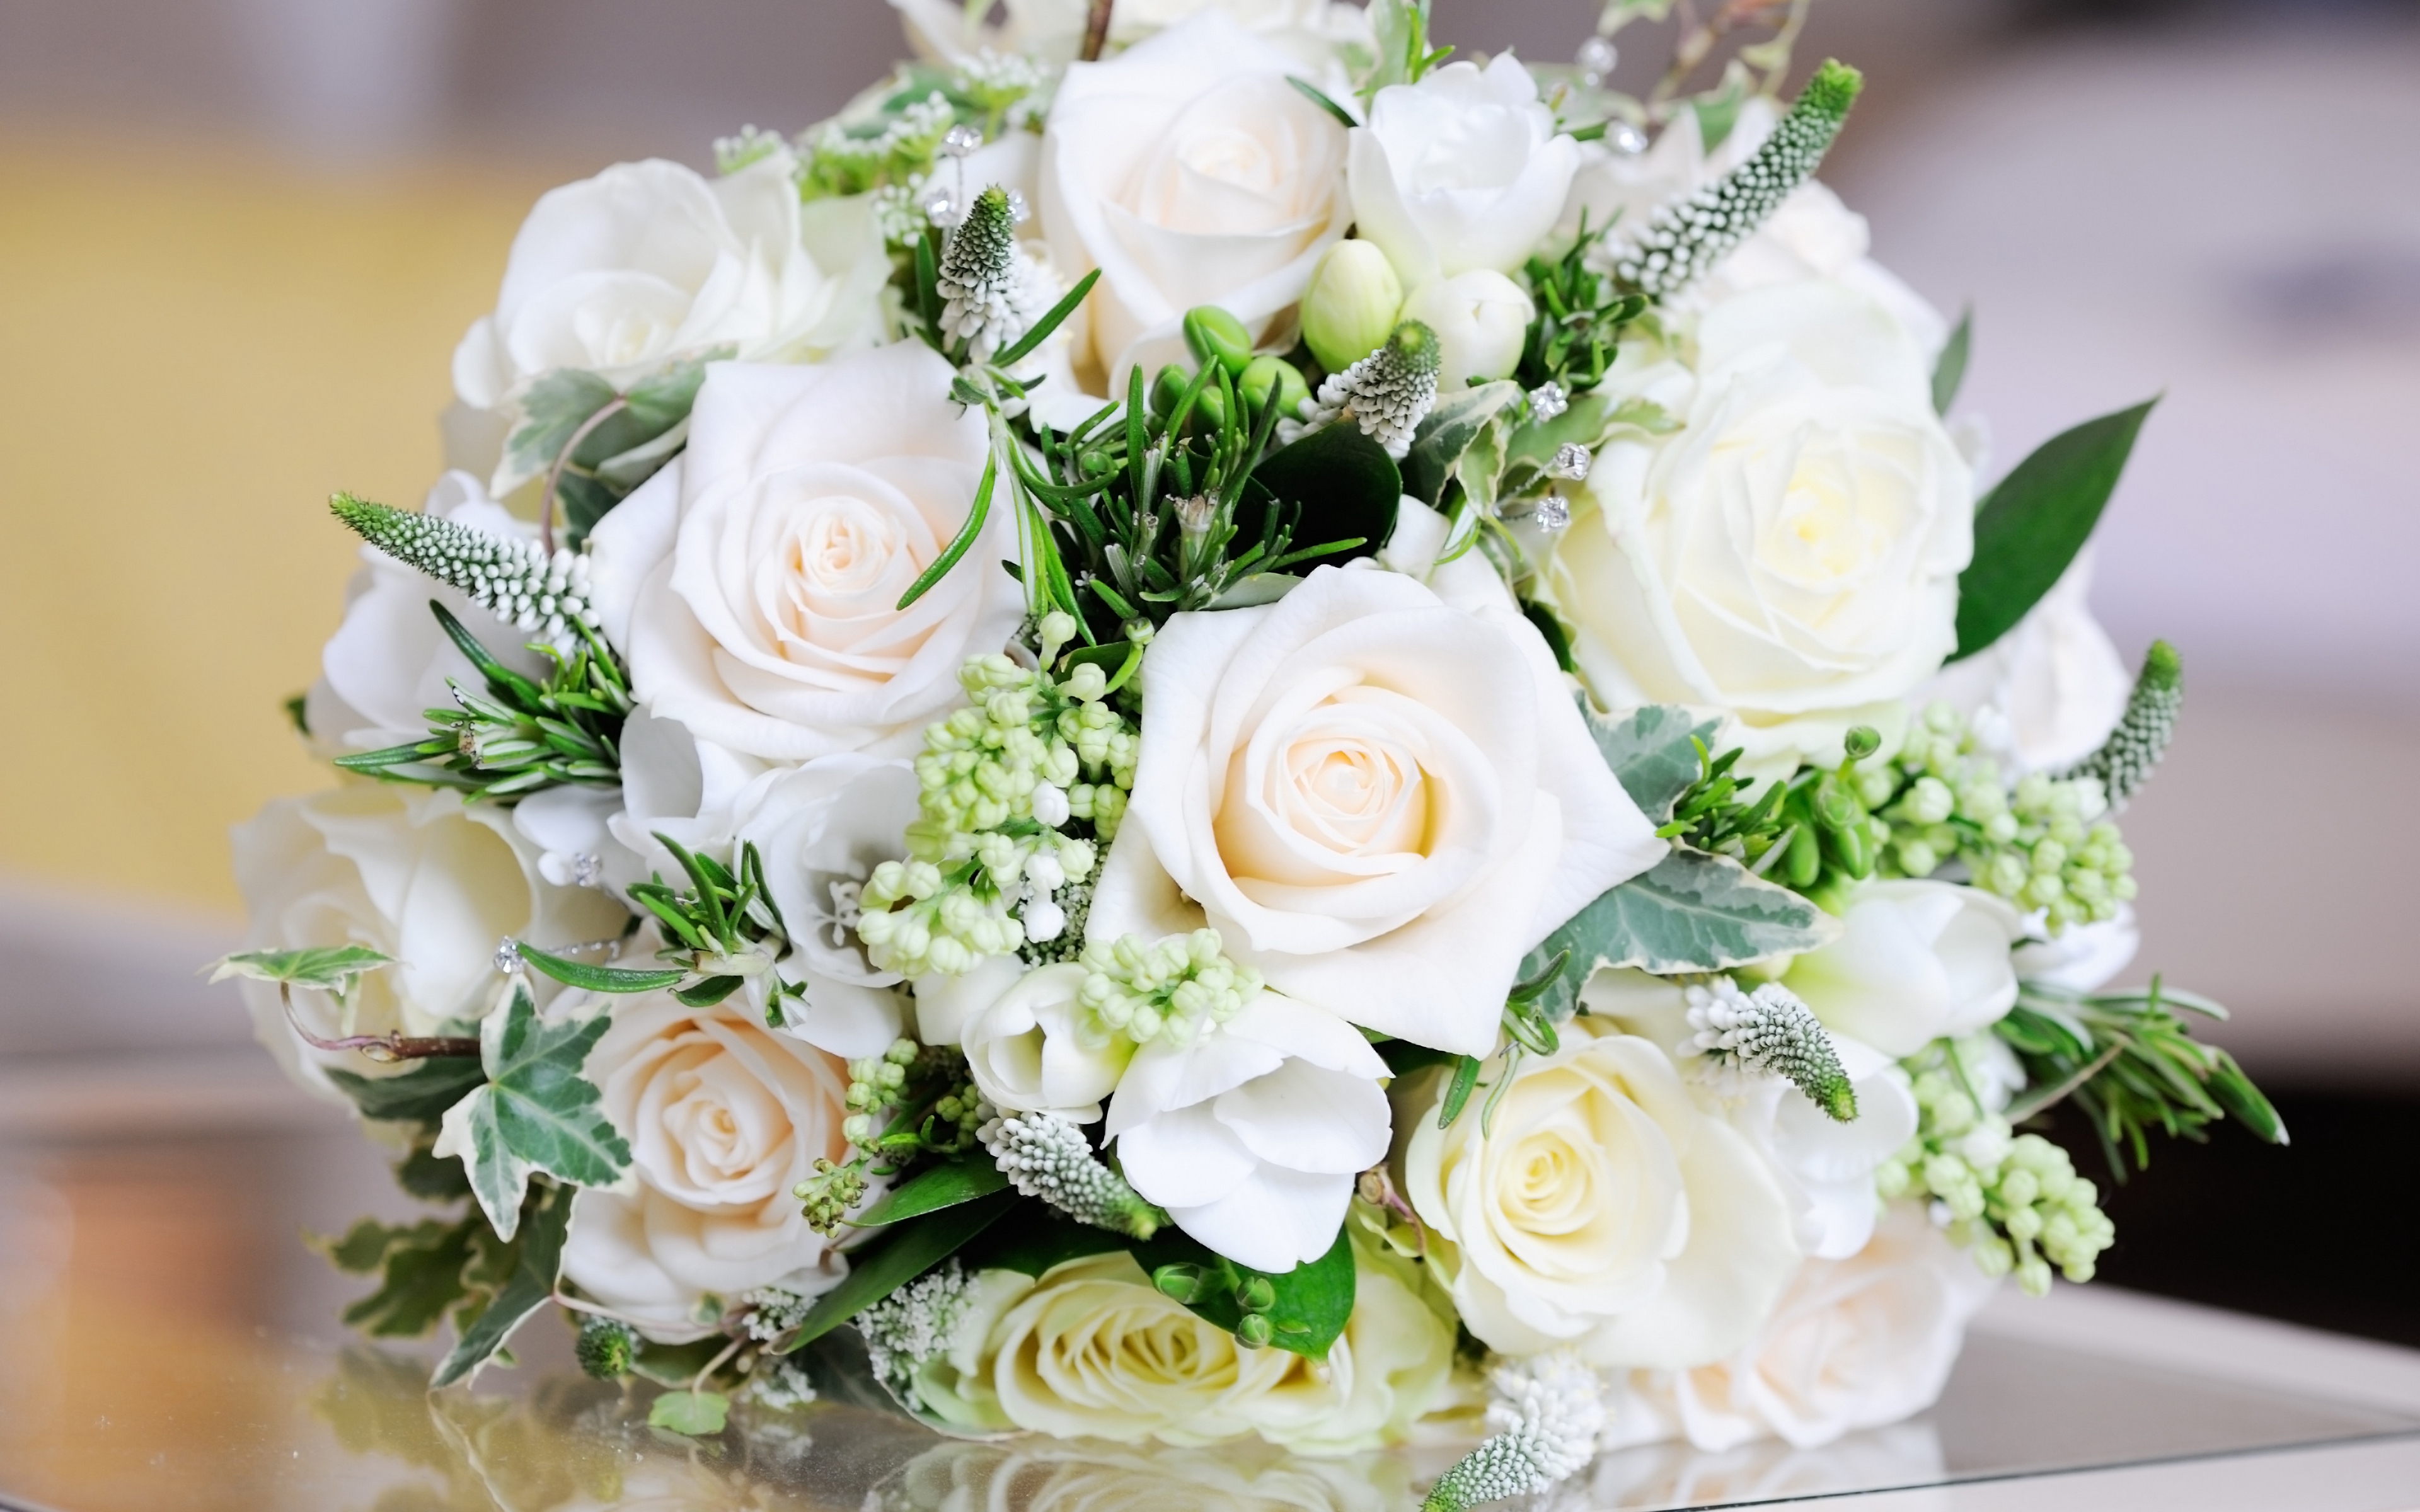 3840x2400, 4К обои, цветы, свадебный букет , белые розы, бутоньерка, 4К wallpapers, flowers, wedding bouquet, white roses, boutonniere